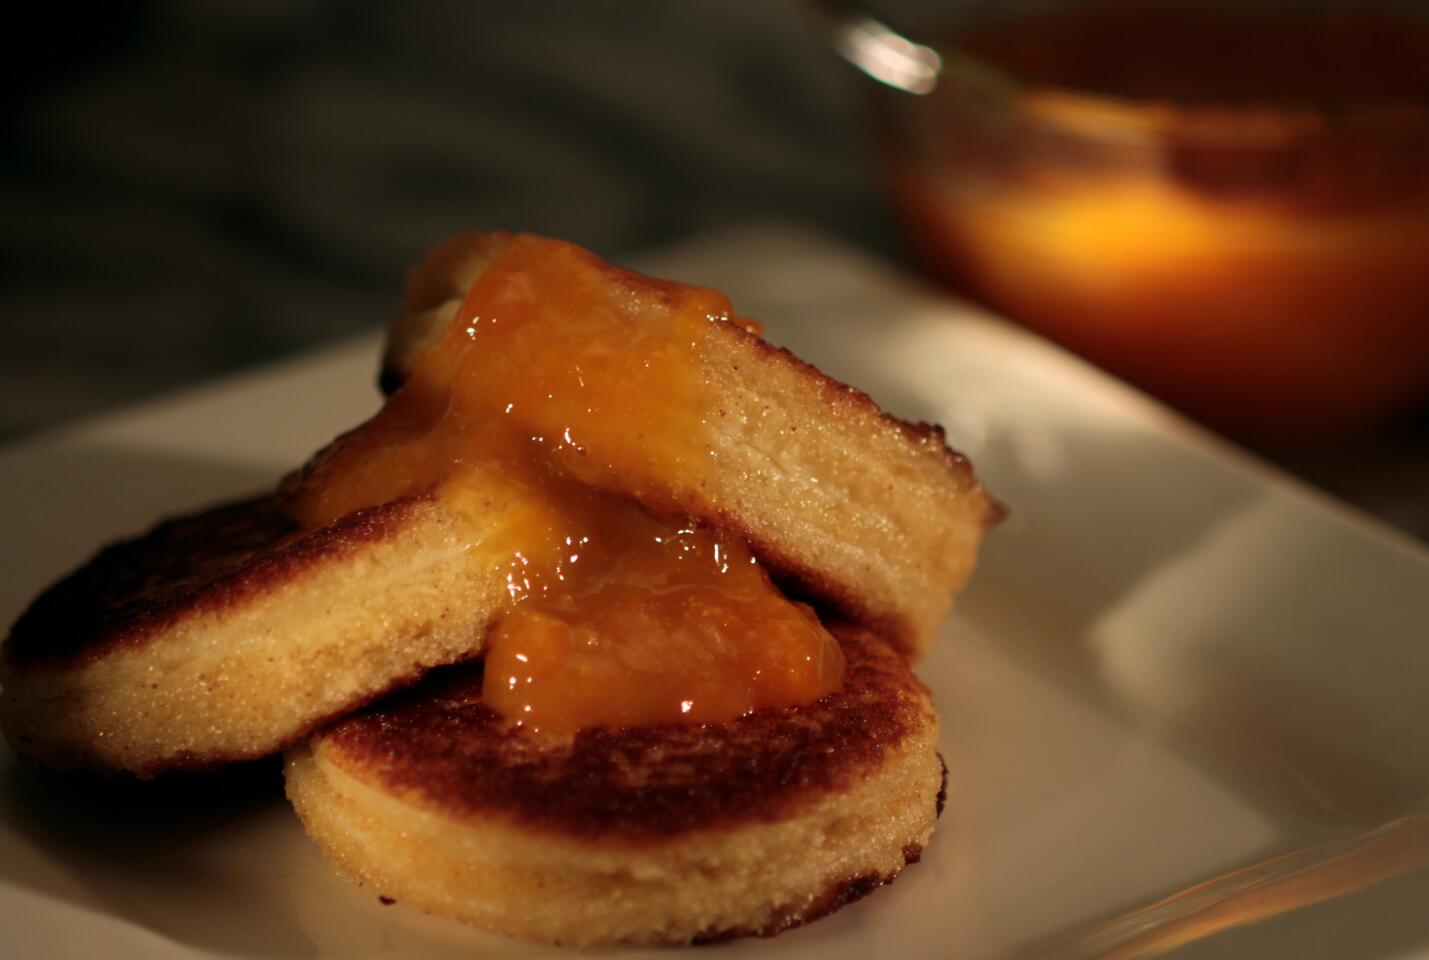 Mascarpone-stuffed French toast with orange compote